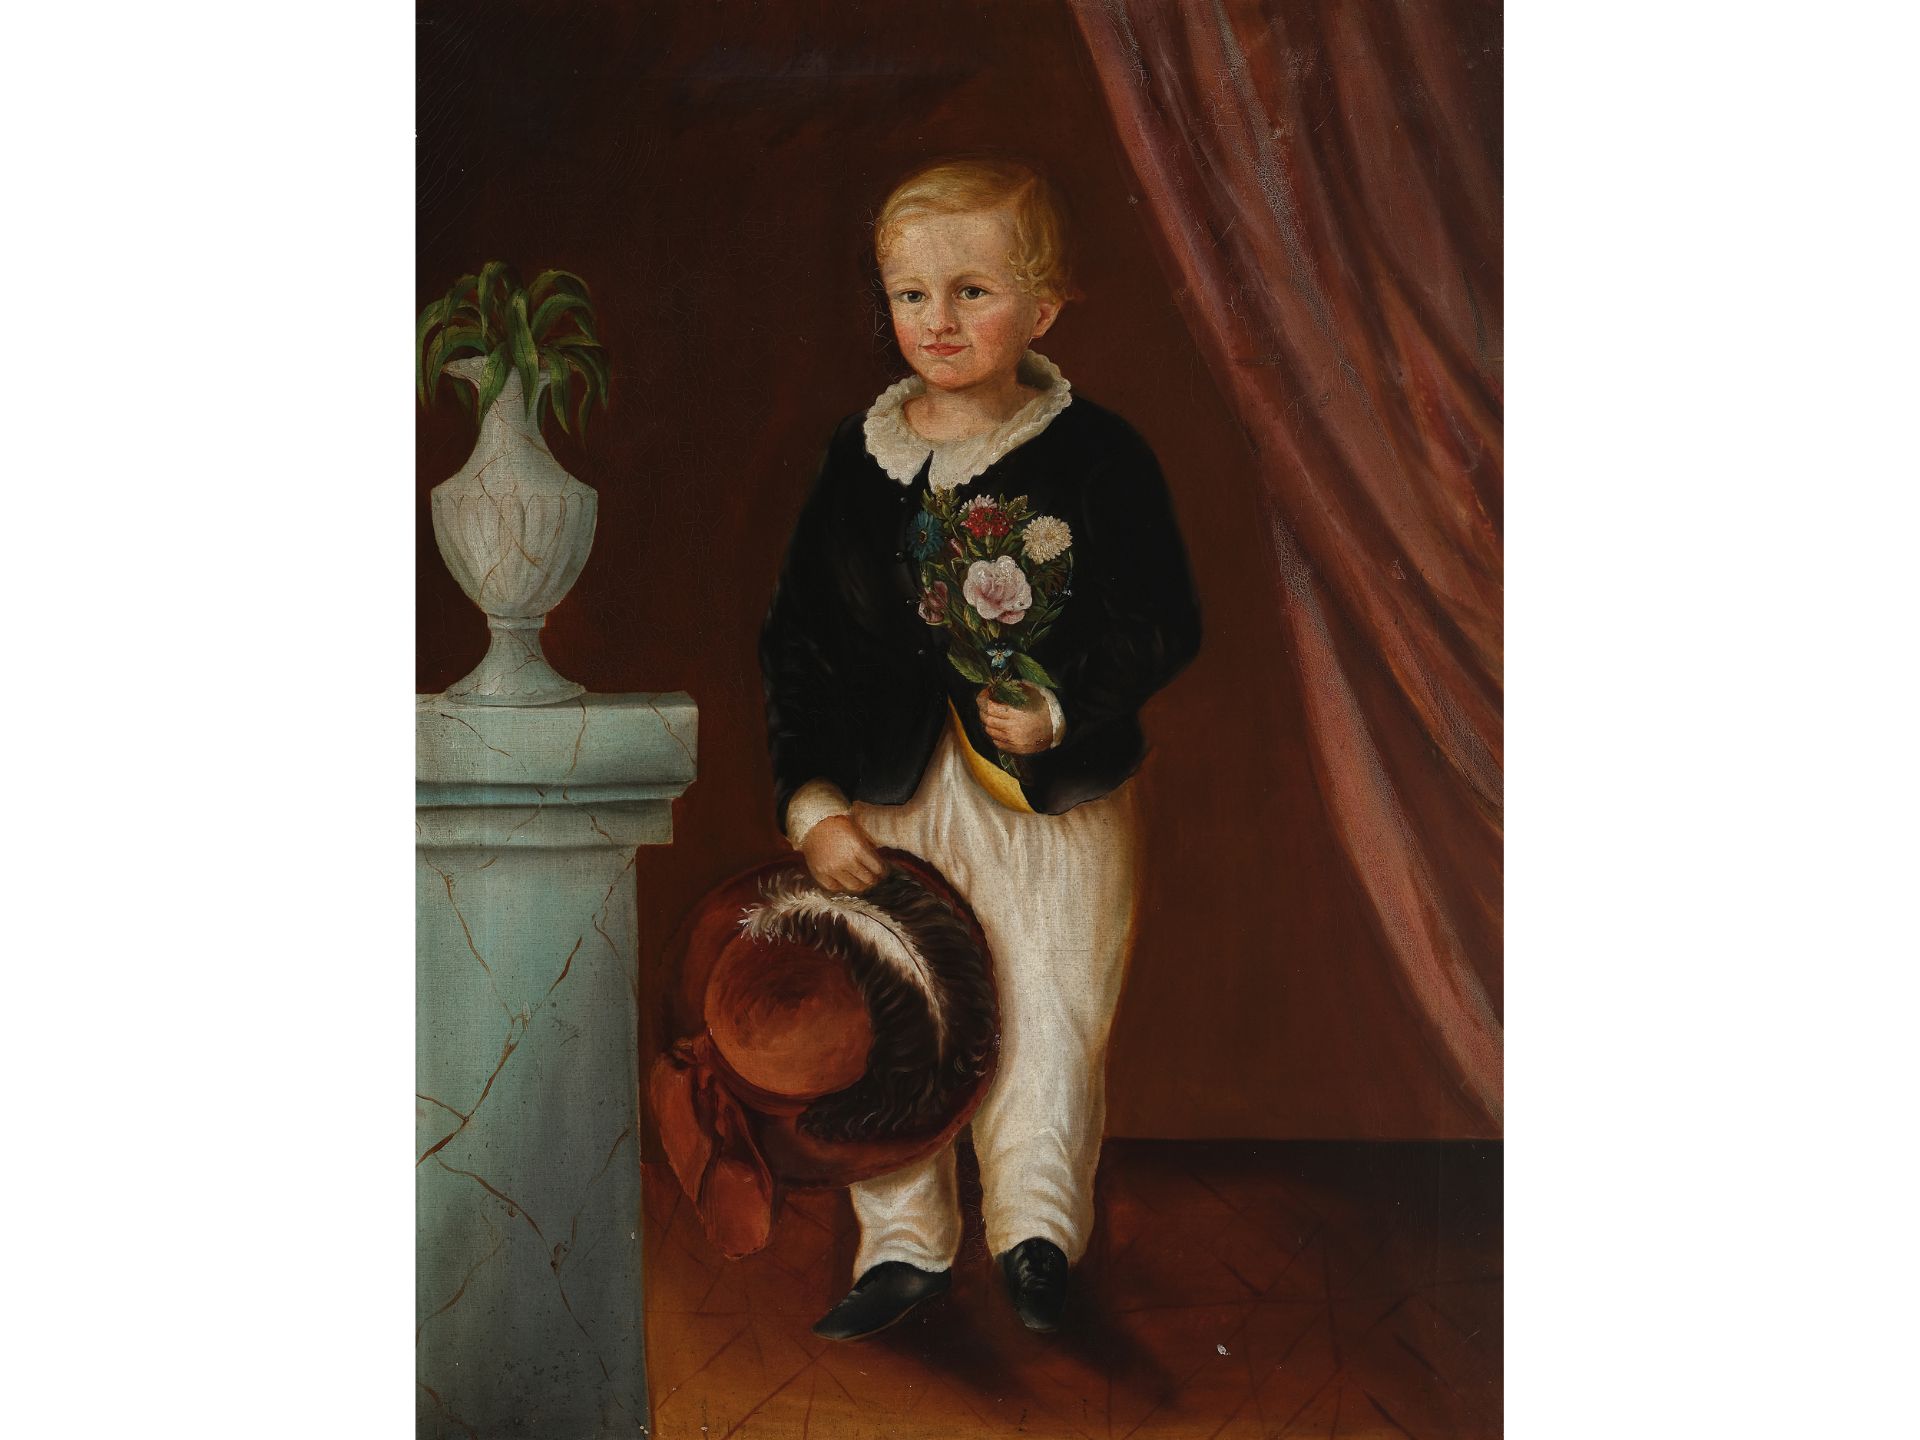 Boy's portrait, South German, 1st half of 19th century